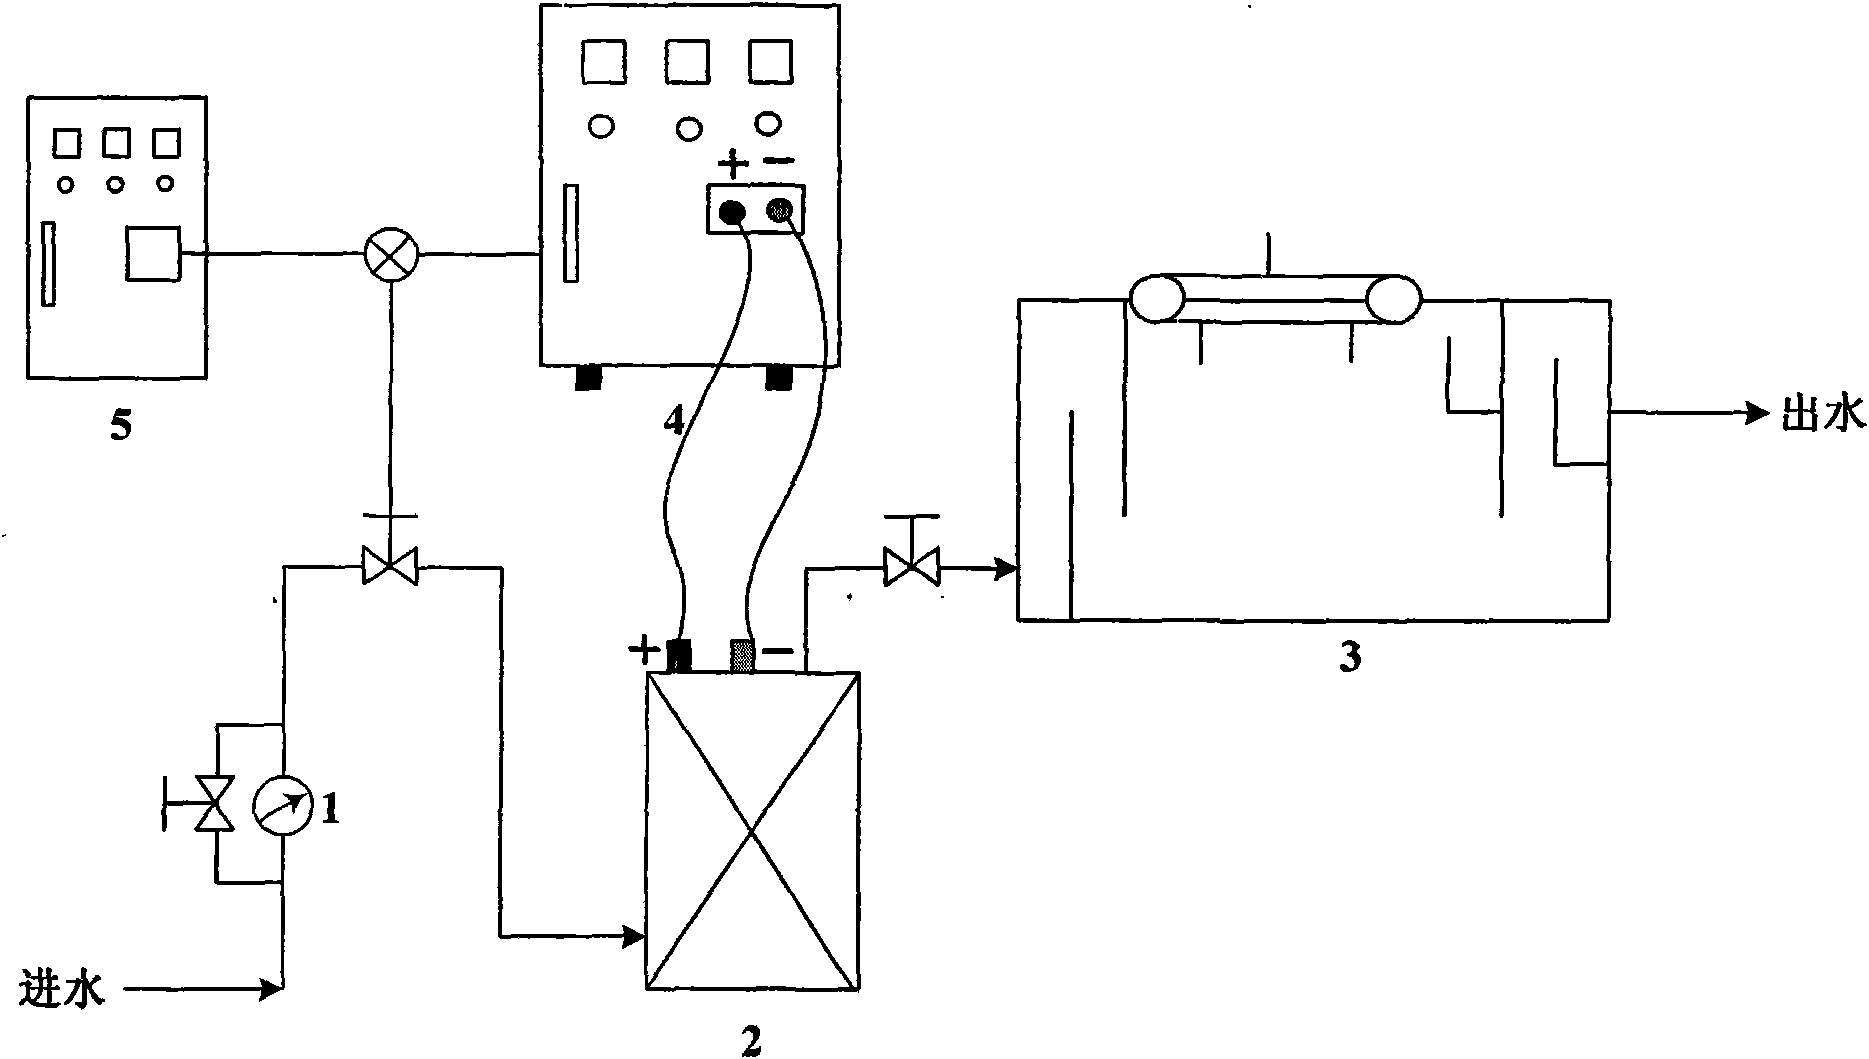 Design scheme of standardized electric flocculation equipment